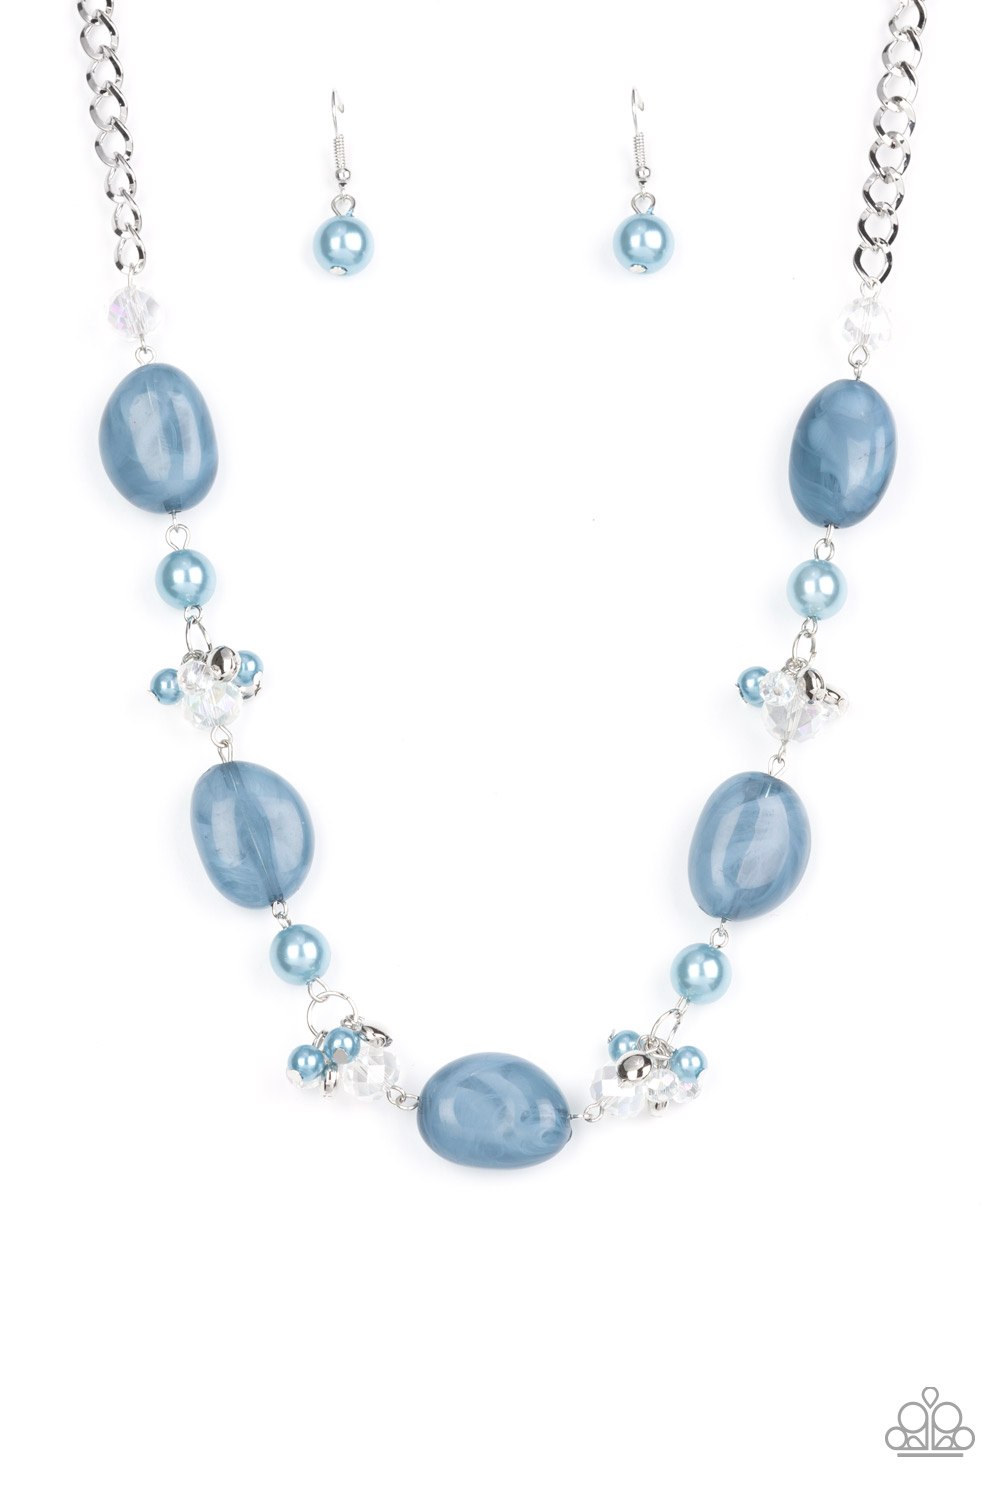 Necklace - The Top TENACIOUS - Blue